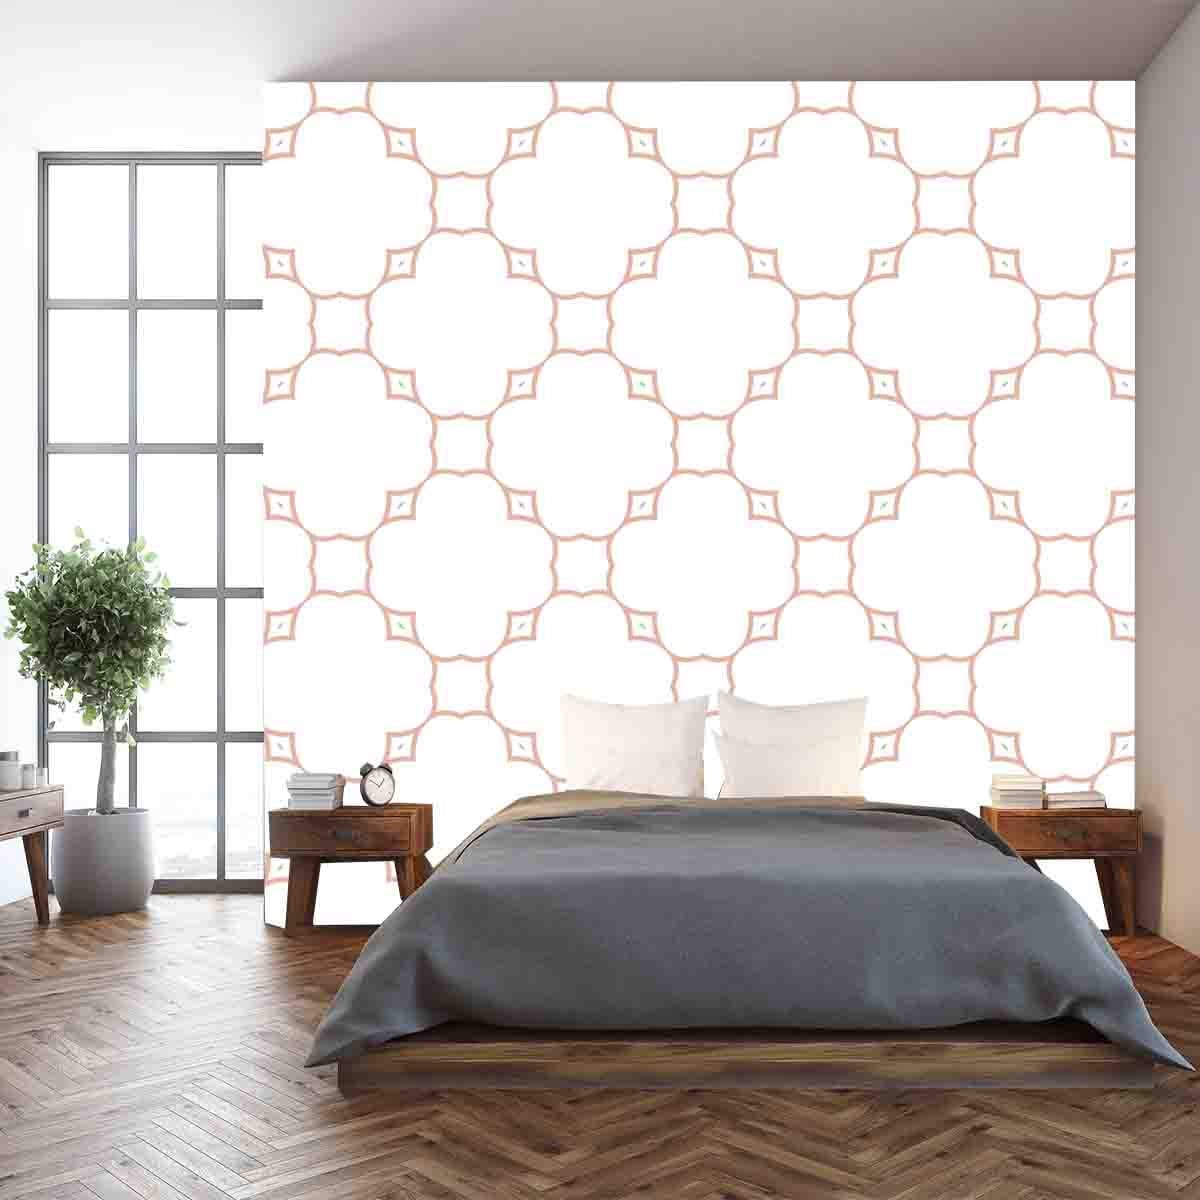 Background Texture in Geometric Ornamental Style Wallpaper Bedroom Mural